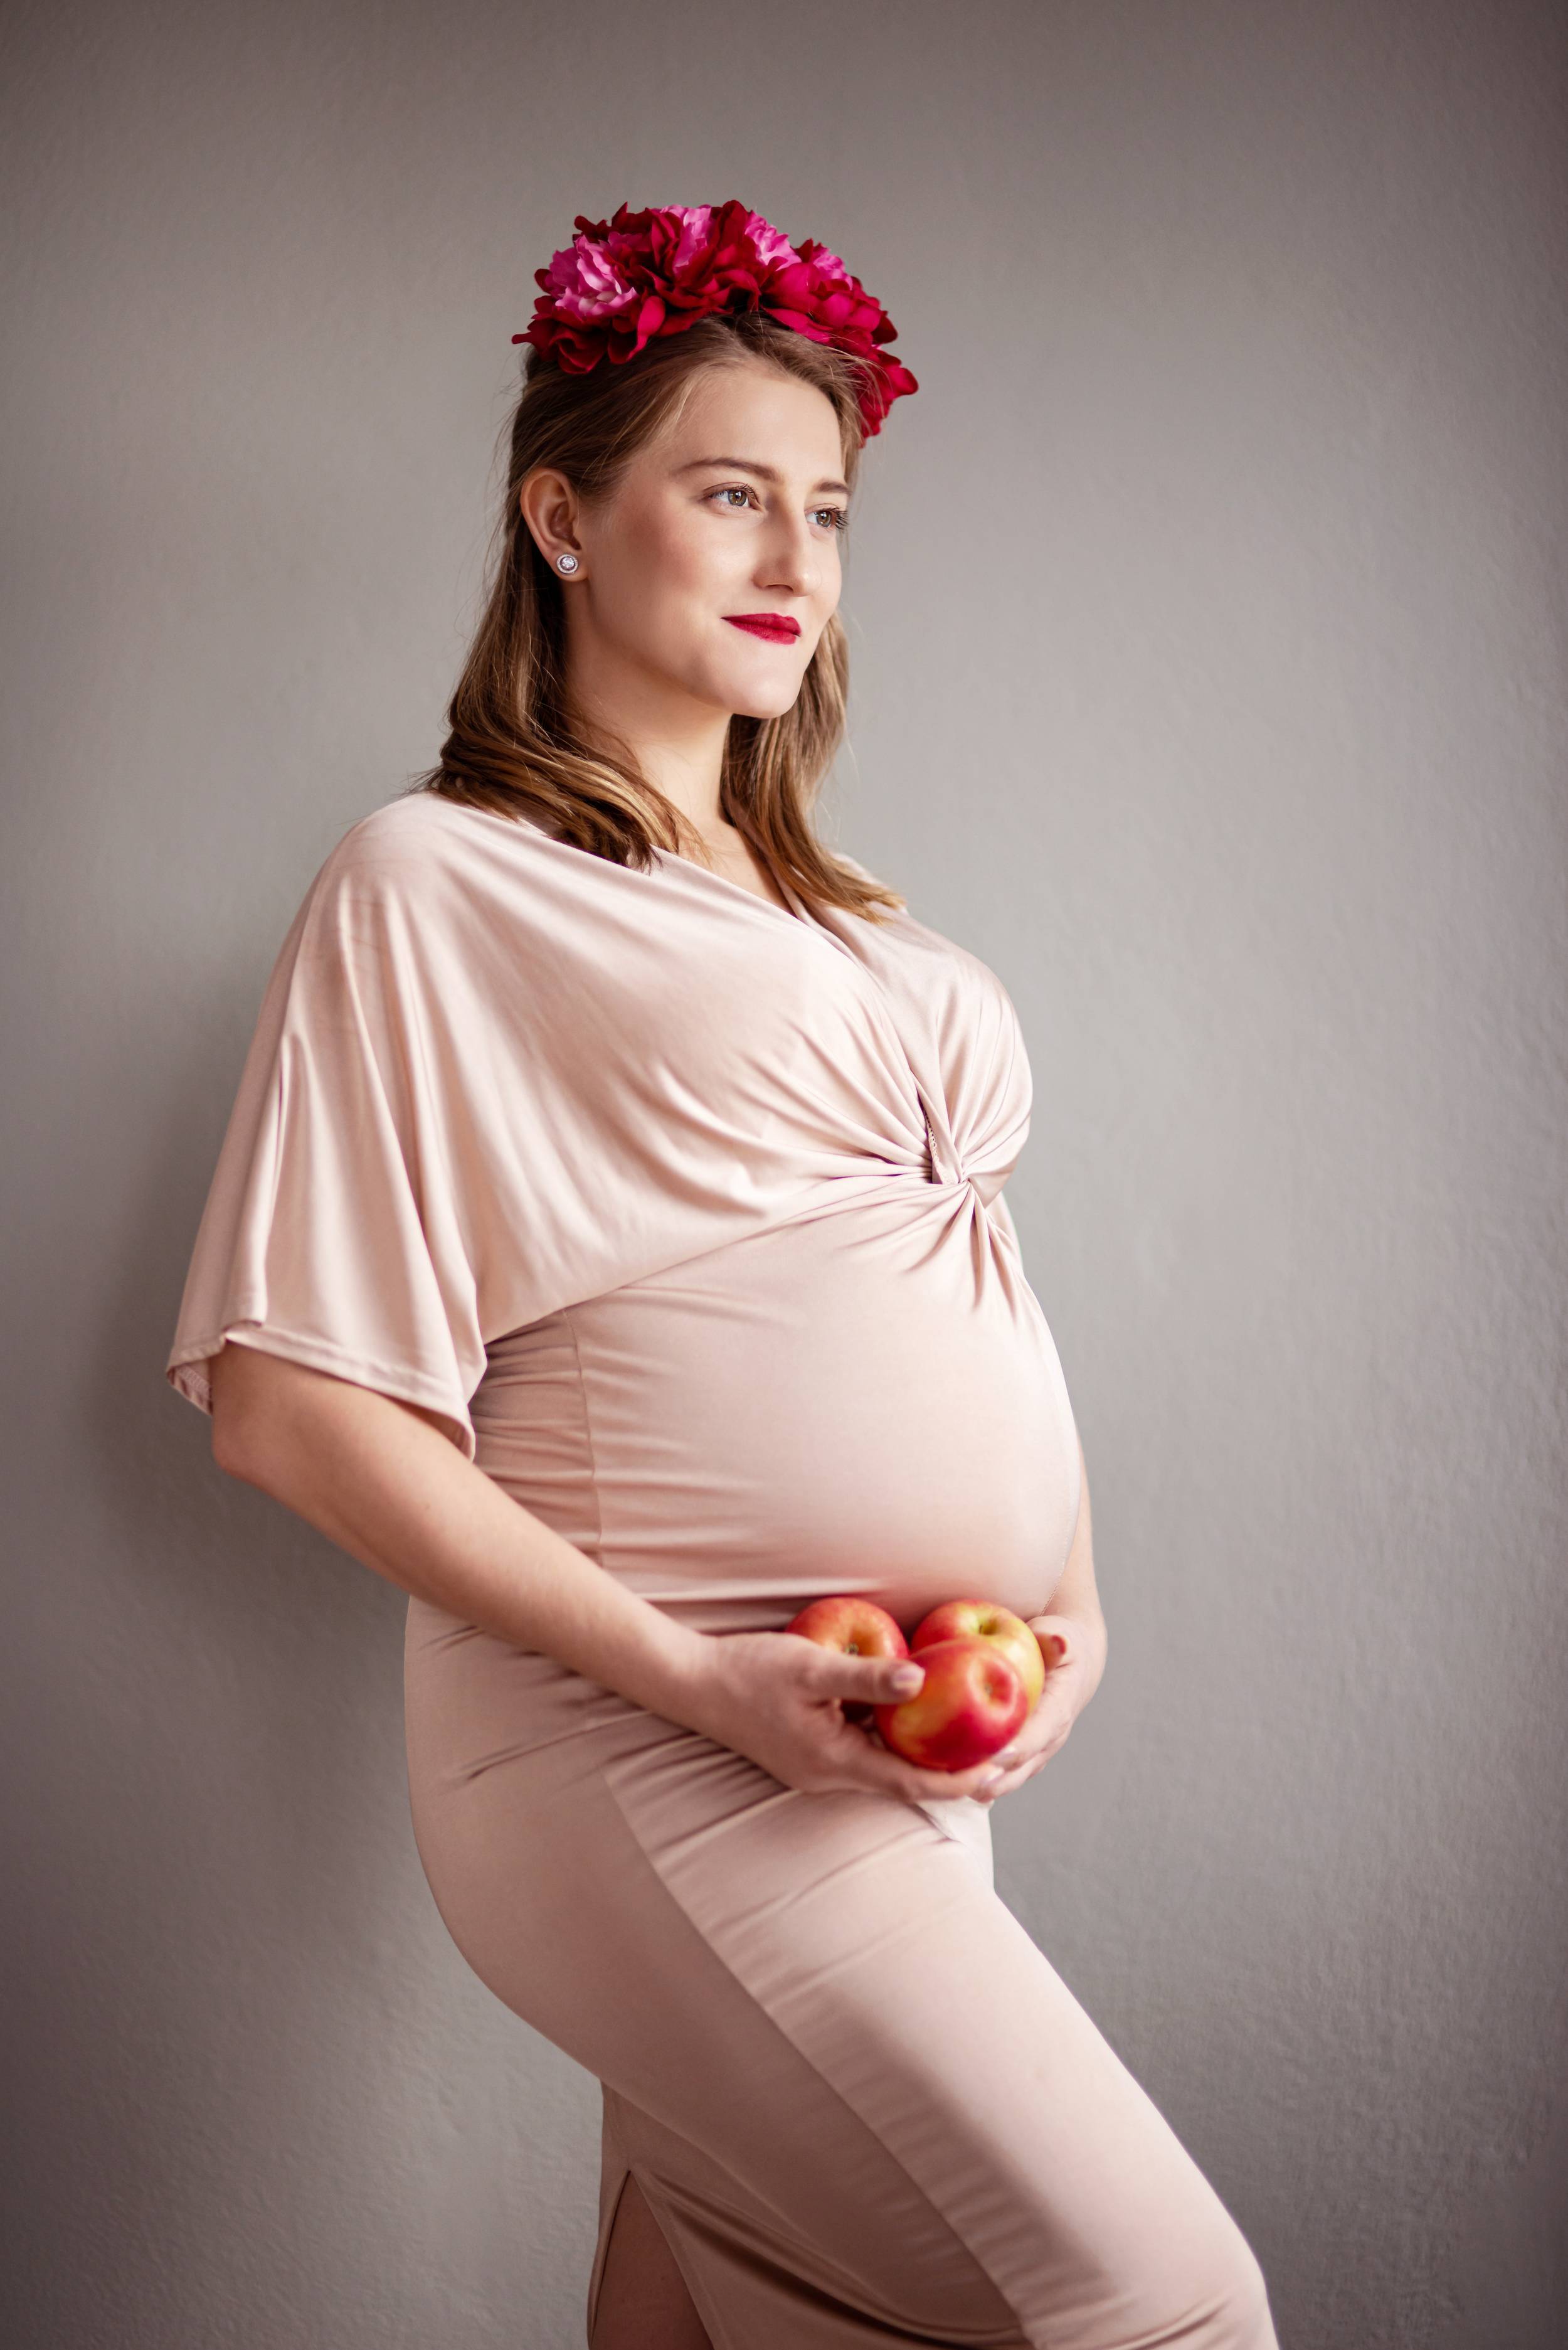 the-very-essence-of-feminine-beauty-pregnant-woma-2021-09-02-14-46-06-utc__1__gmzySuHFv.jpg